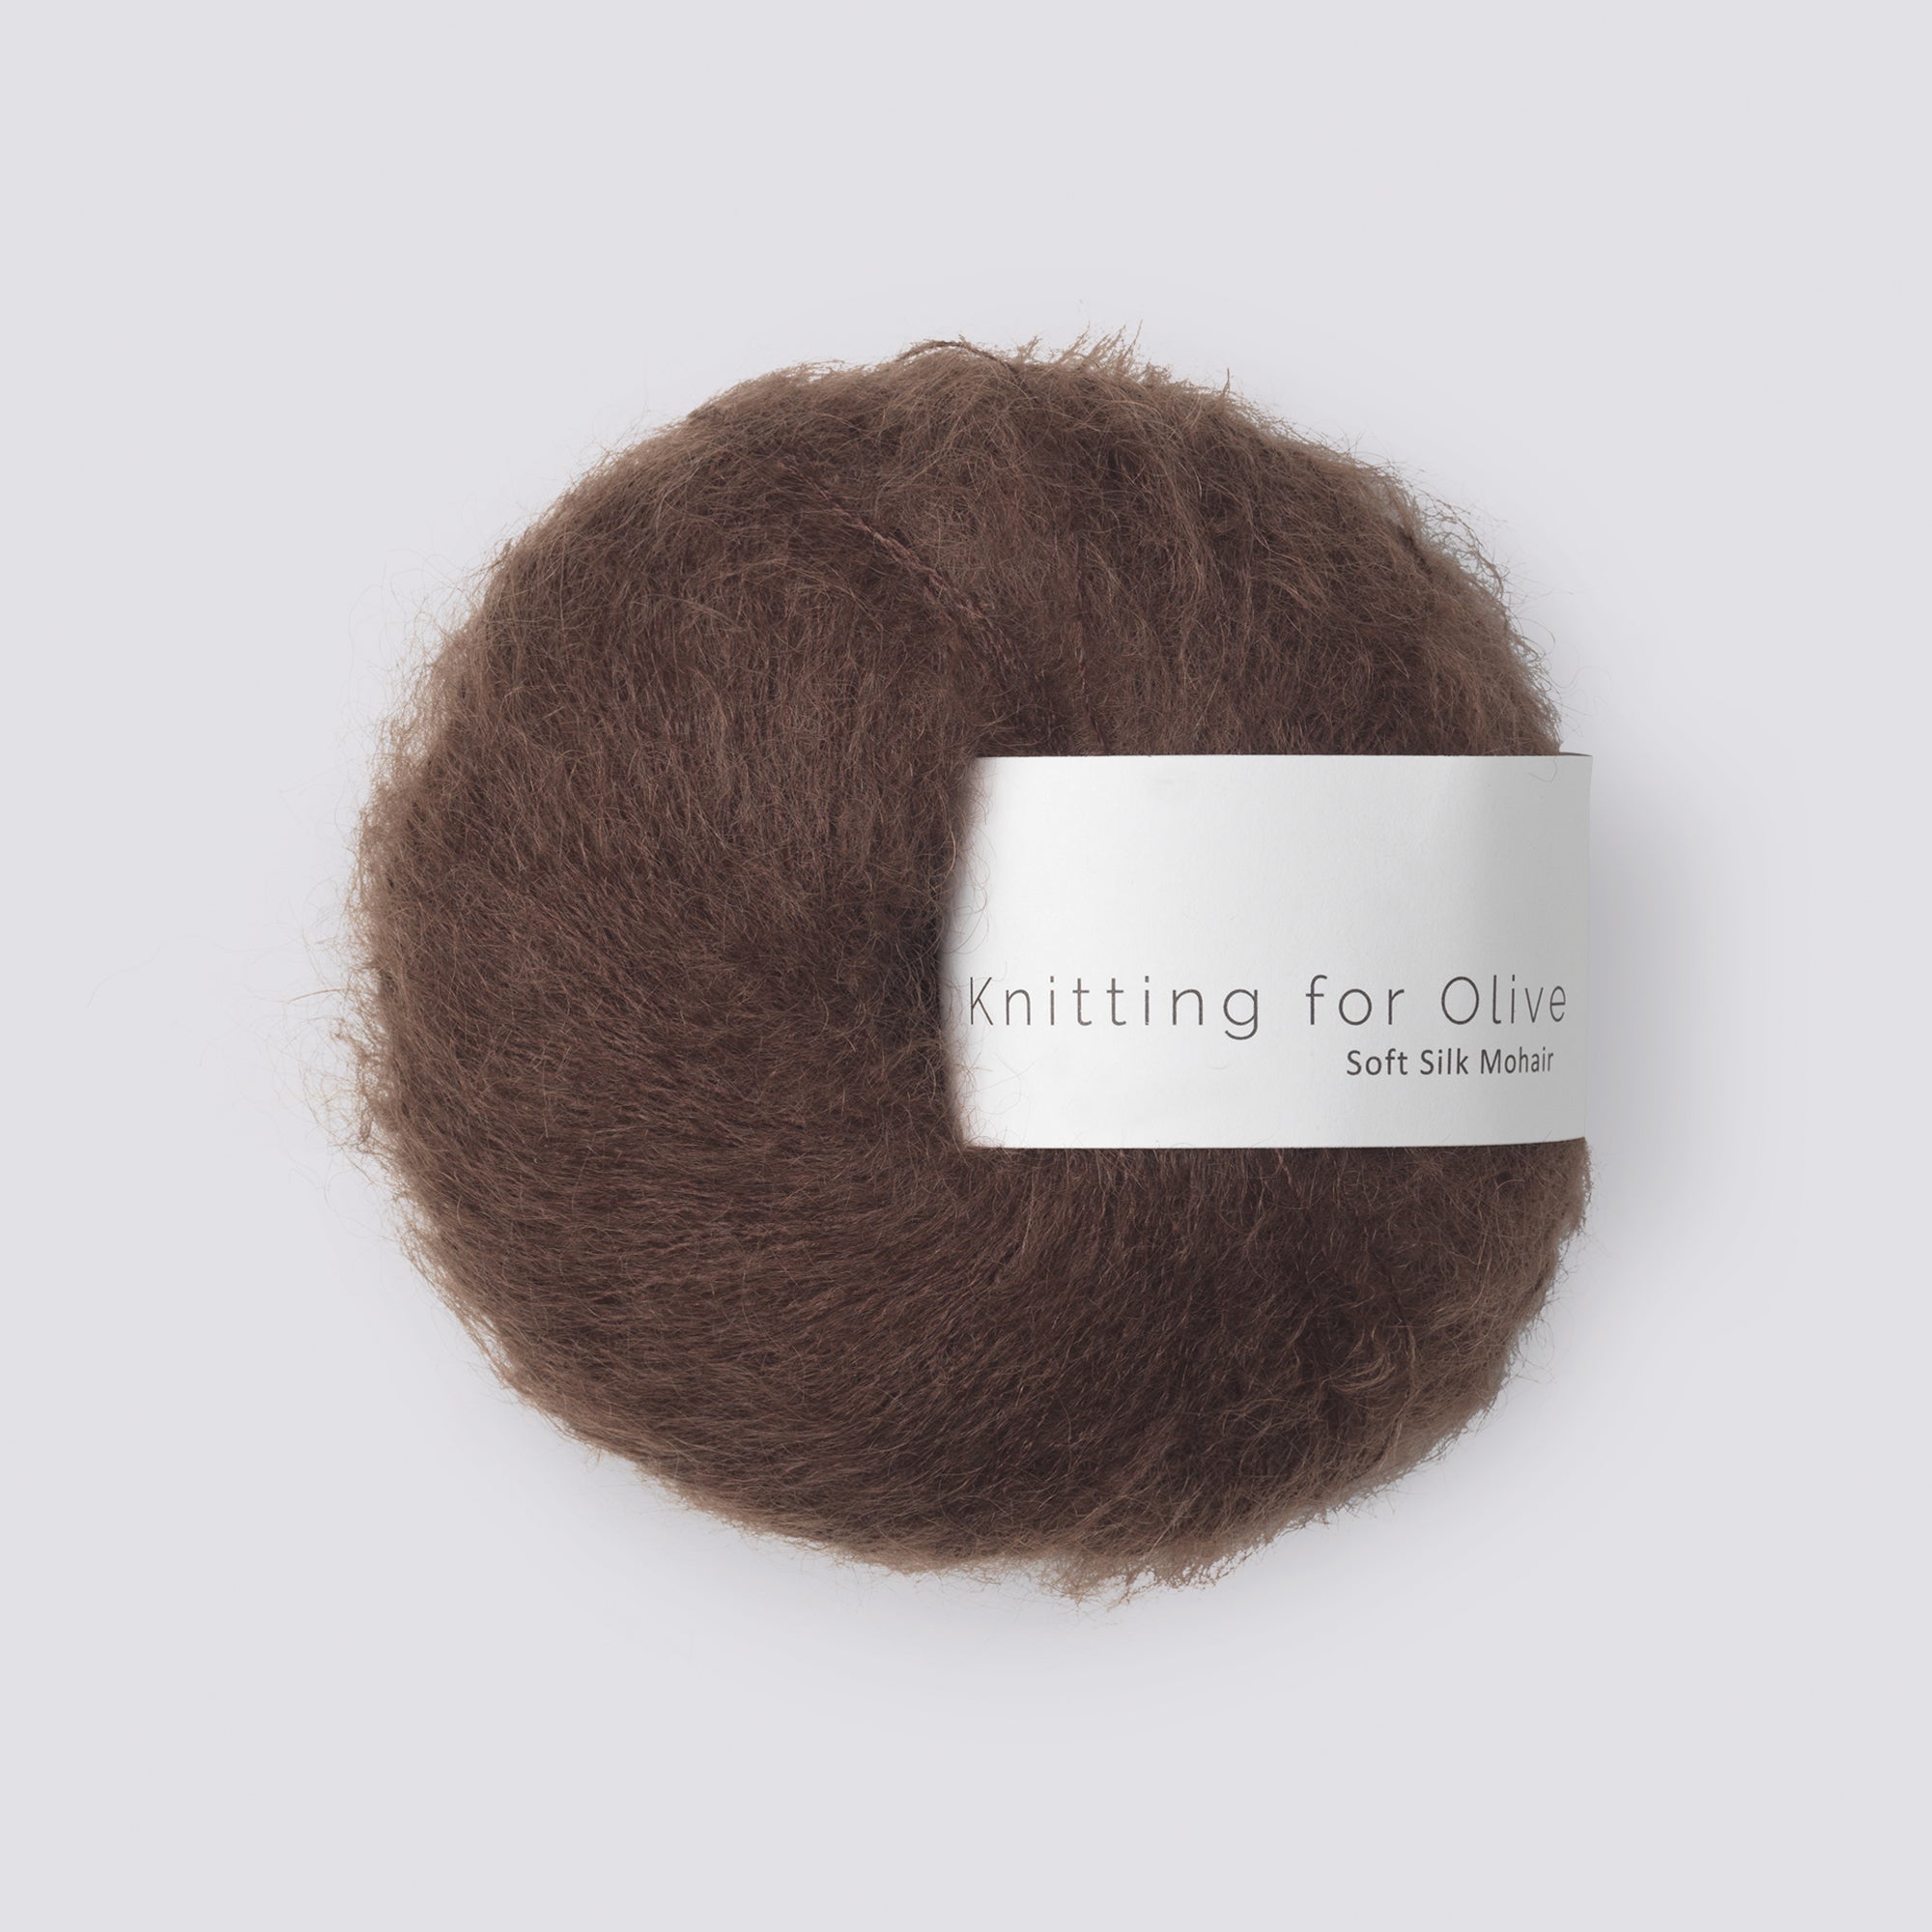 Knitting for Olive Soft Silk Mohair - Schokolade